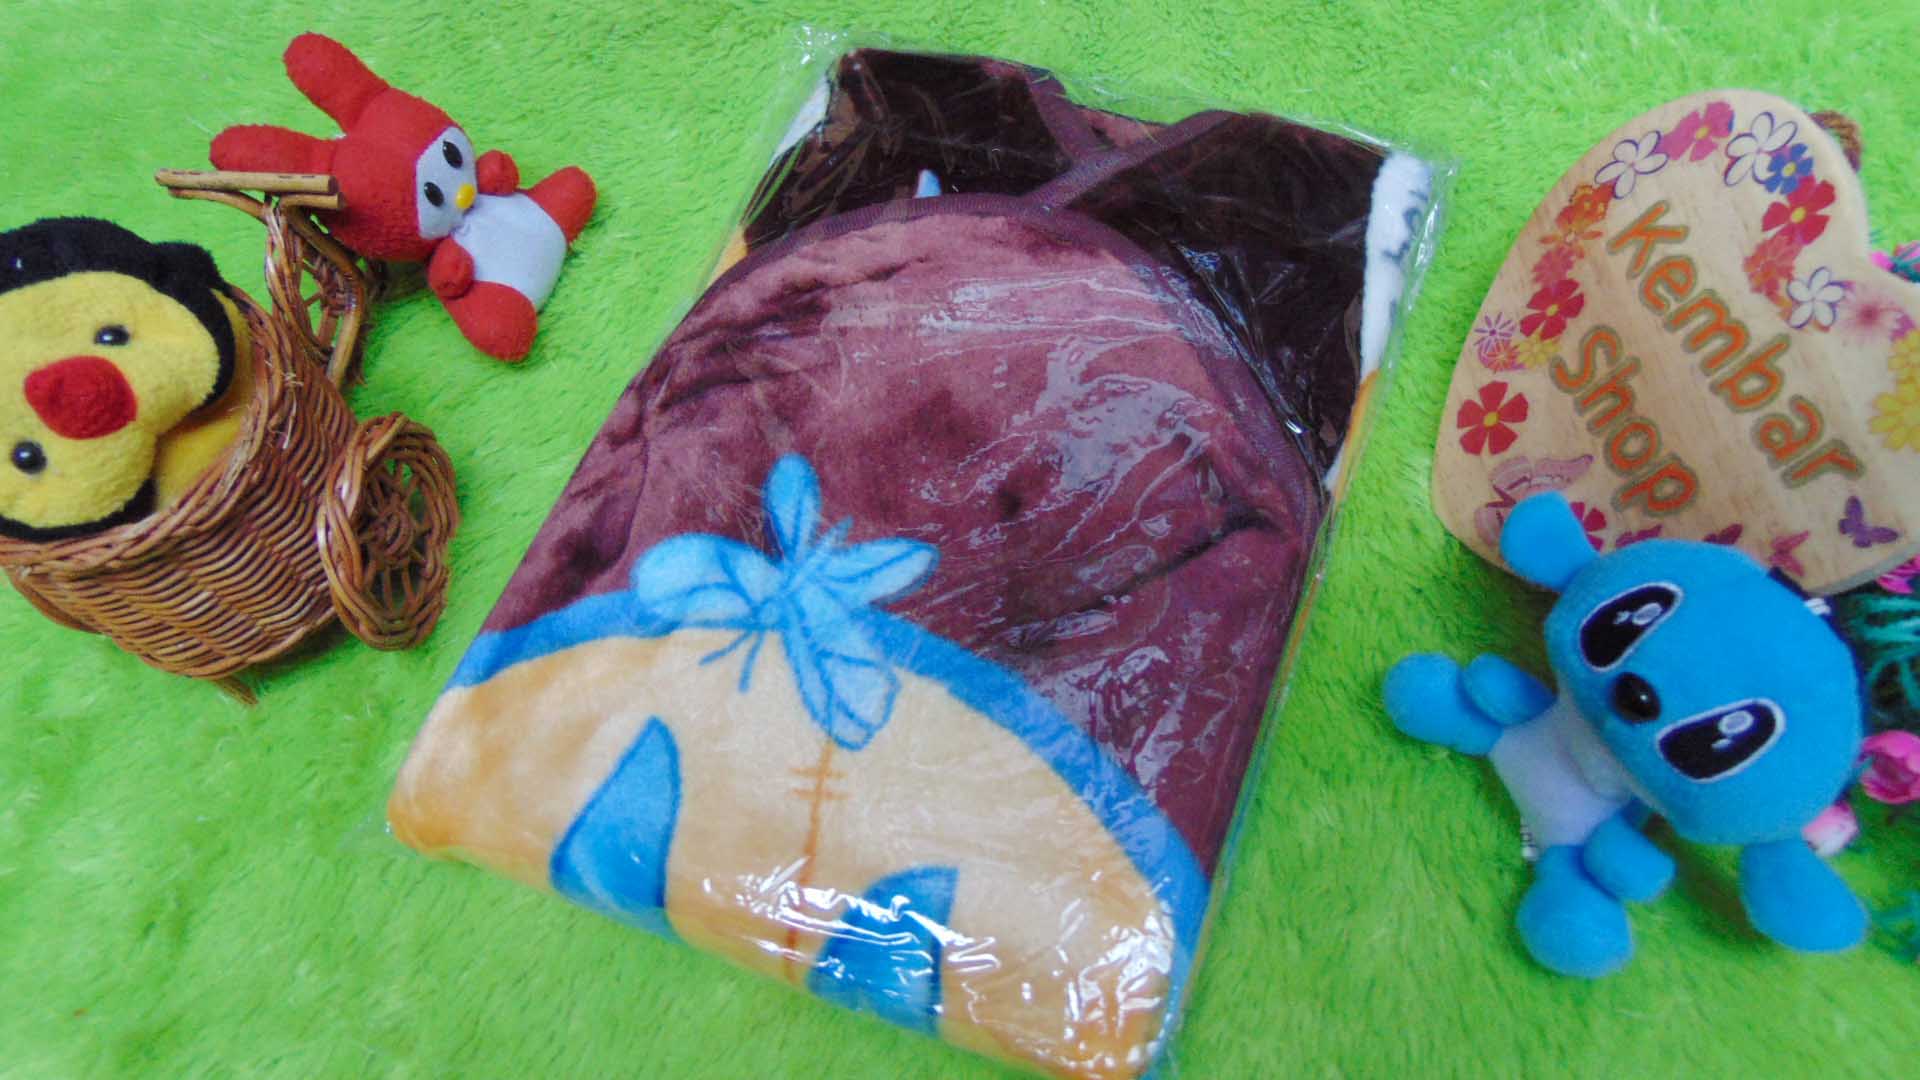 kado bayi baby new born gift hadiah lahiran selimut topi bulu tebal hangat lembut motif beruang cokelat (2)